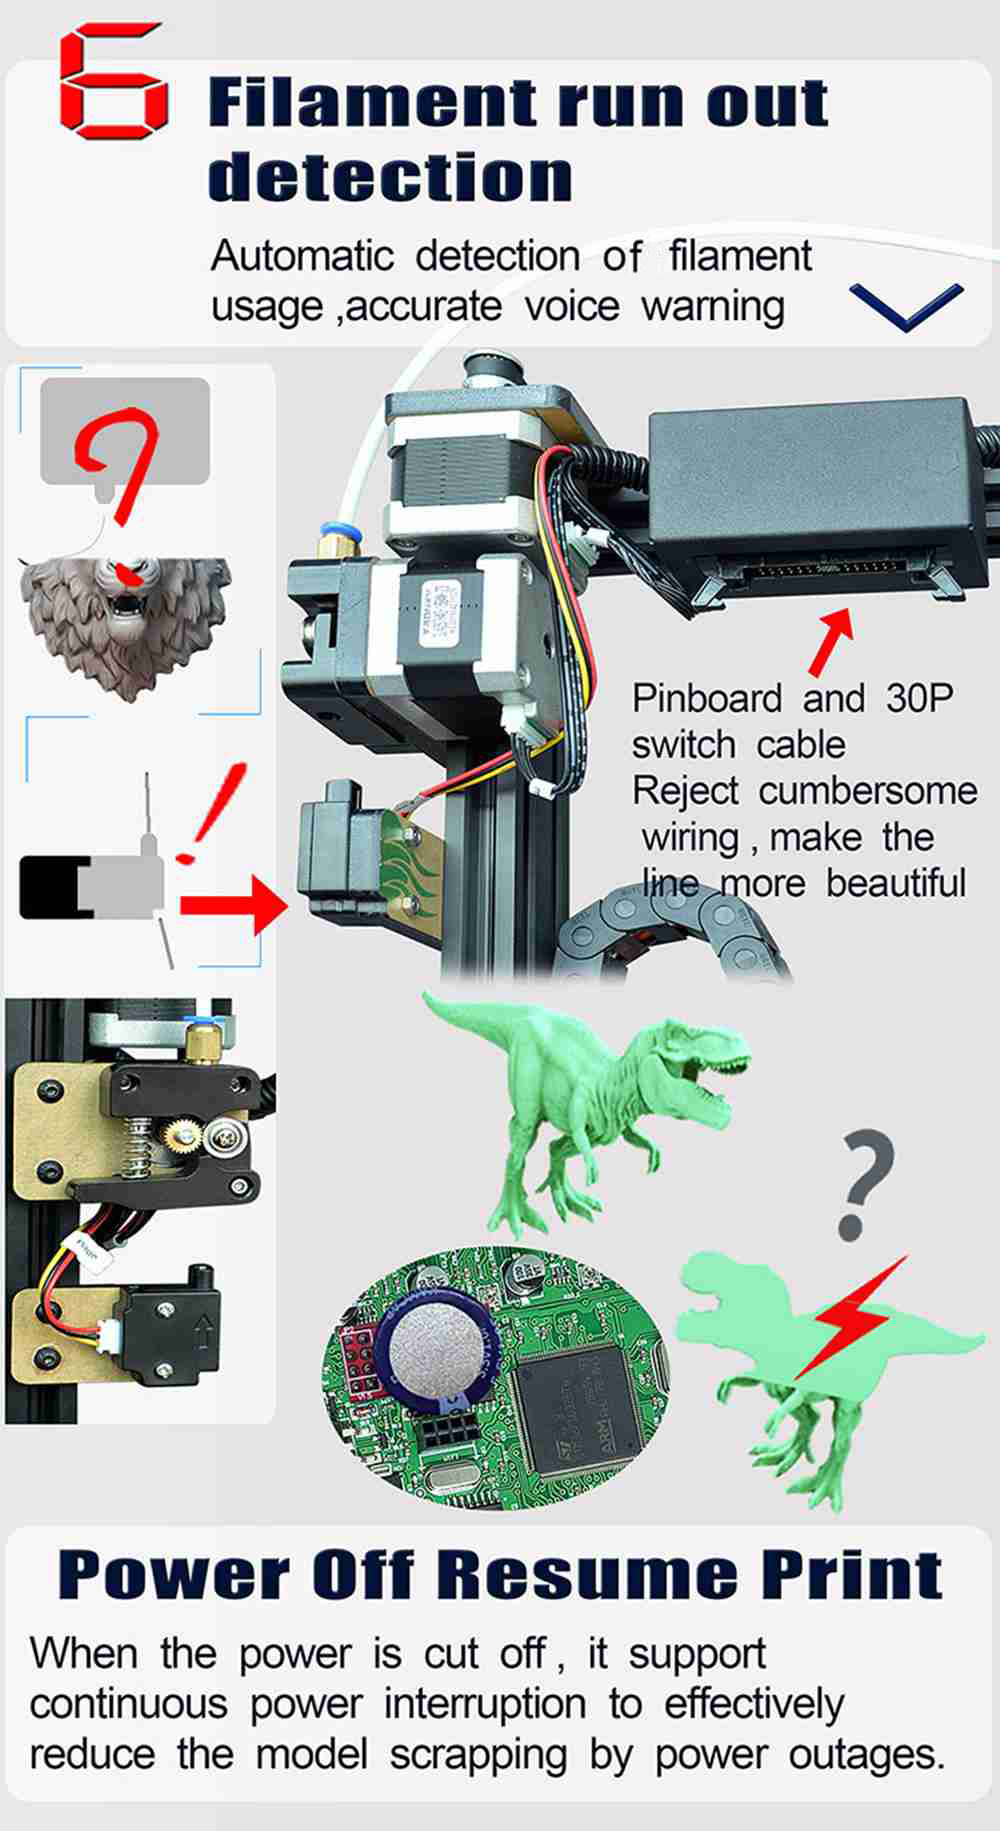 TRONXY X5SA 24V 3D Printer 330 x 330 x 400 mm Auto Leveling Filament Sensor Hervat printfunctie